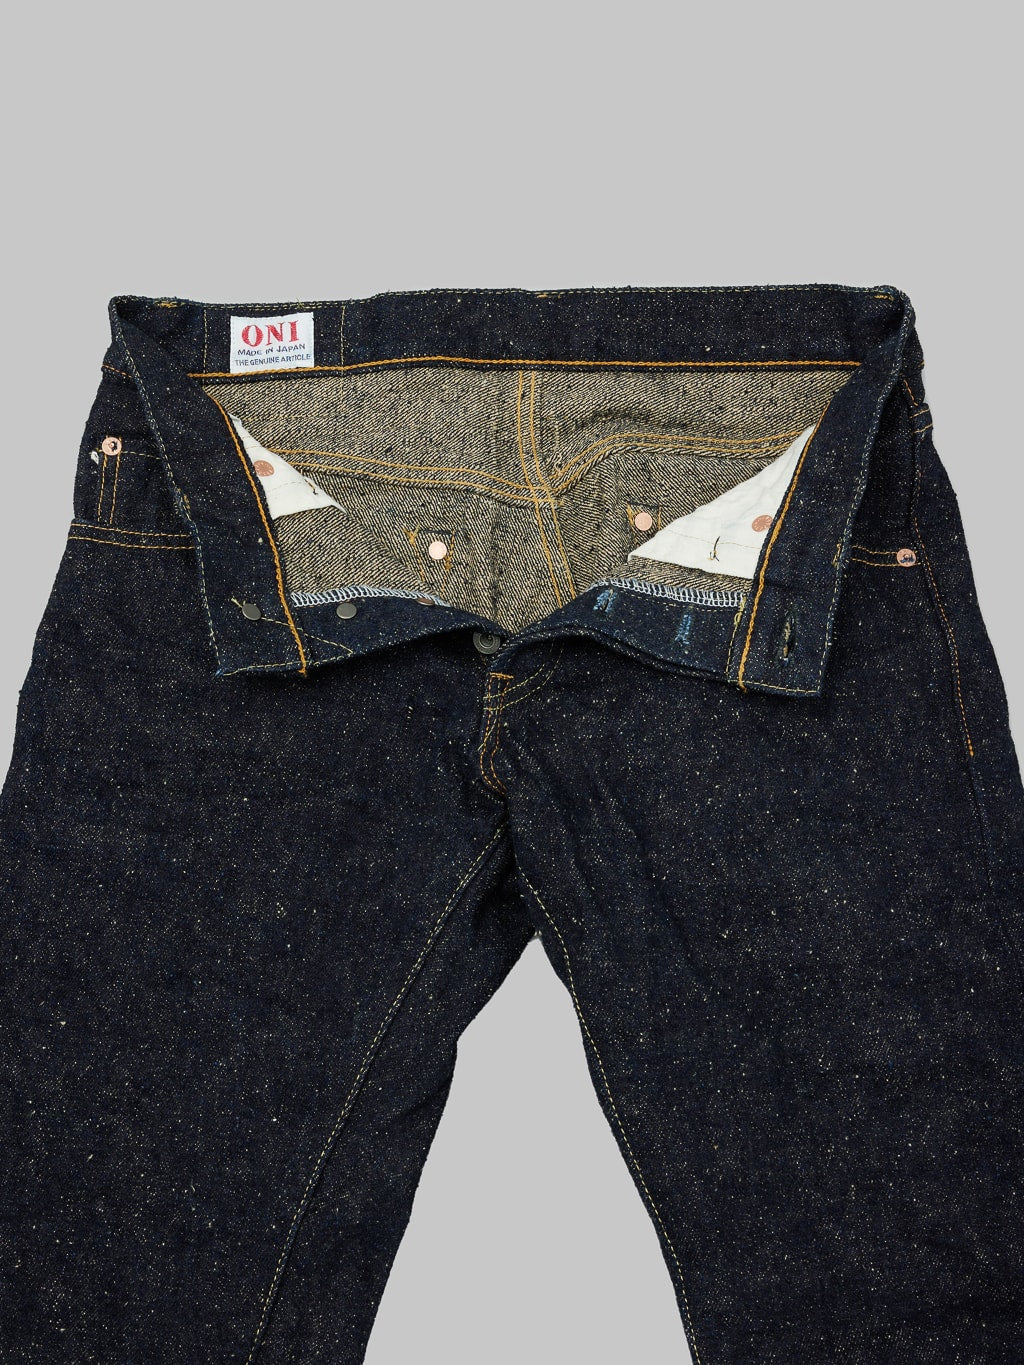 ONI Denim 622 Asphalt 20oz relaxed tapered Jeans interior fabric